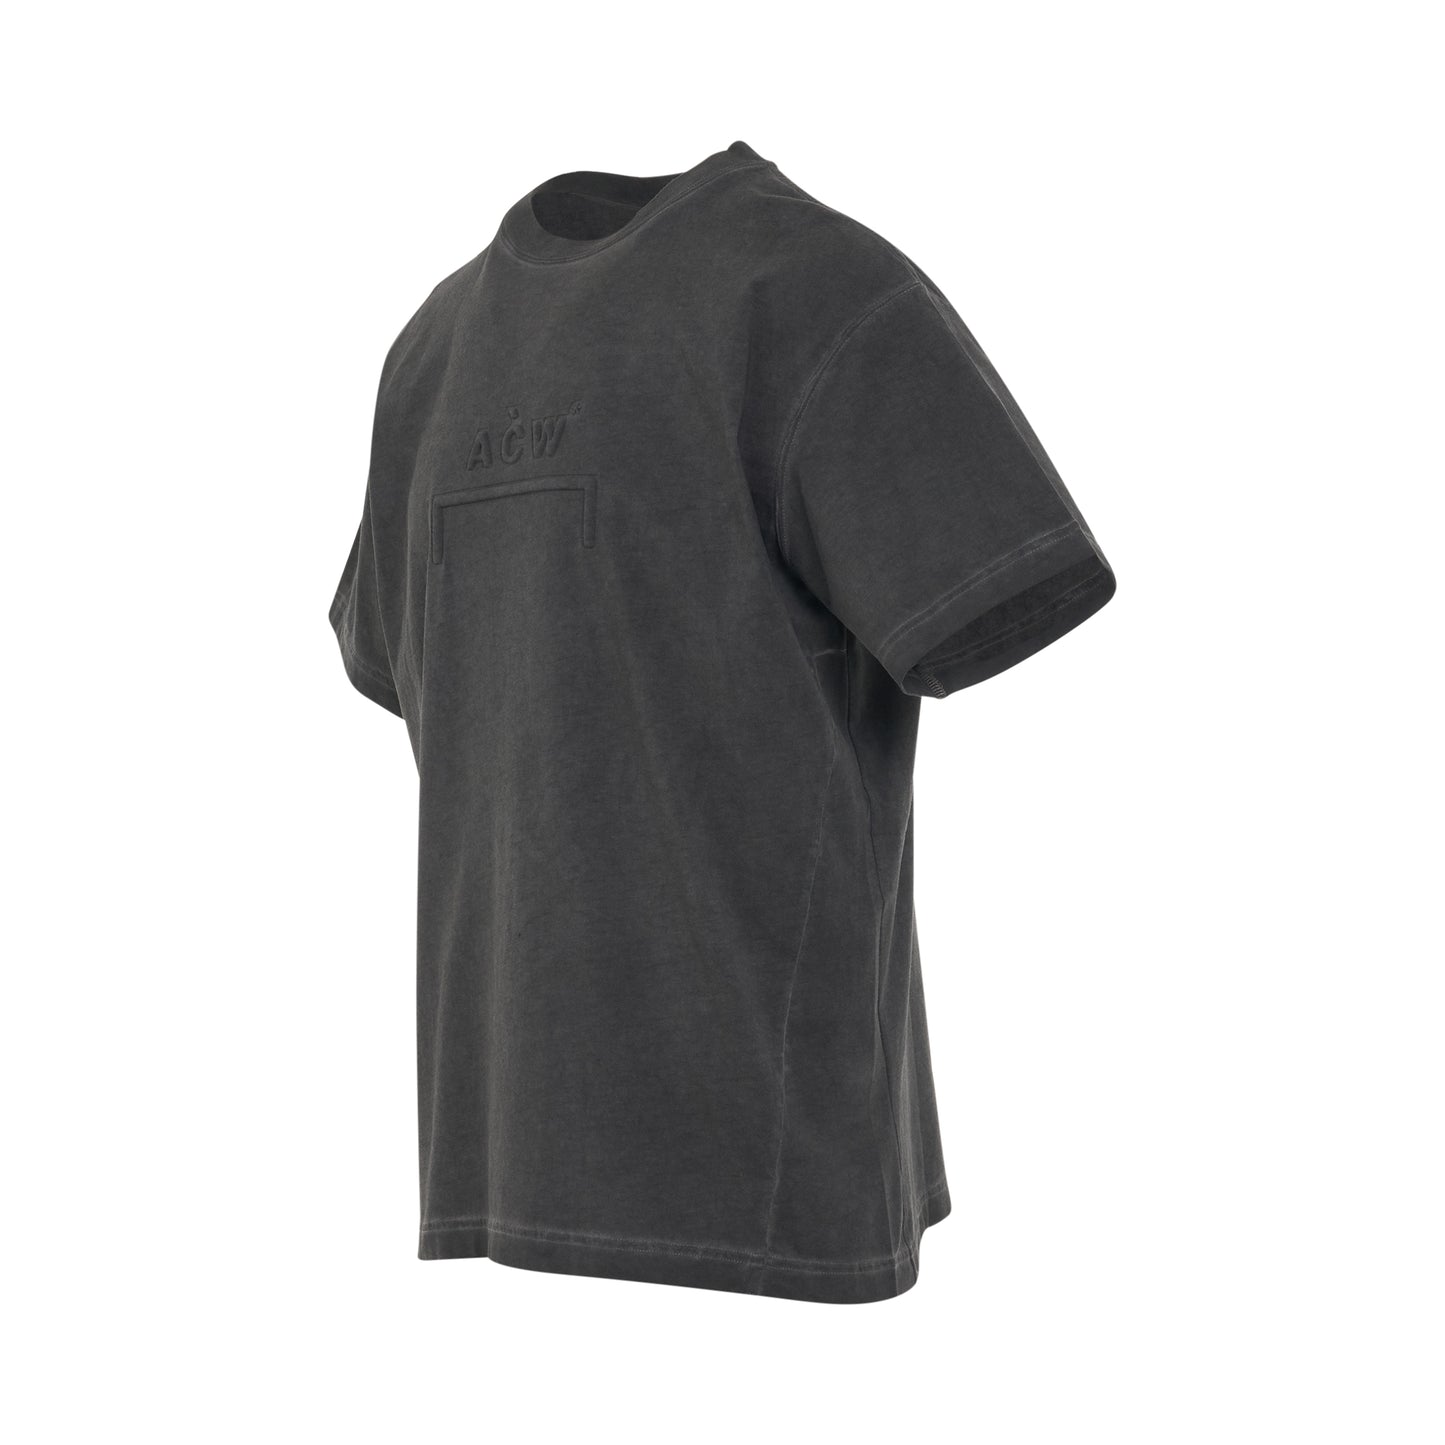 Dissolve Dye T-Shirt in Black